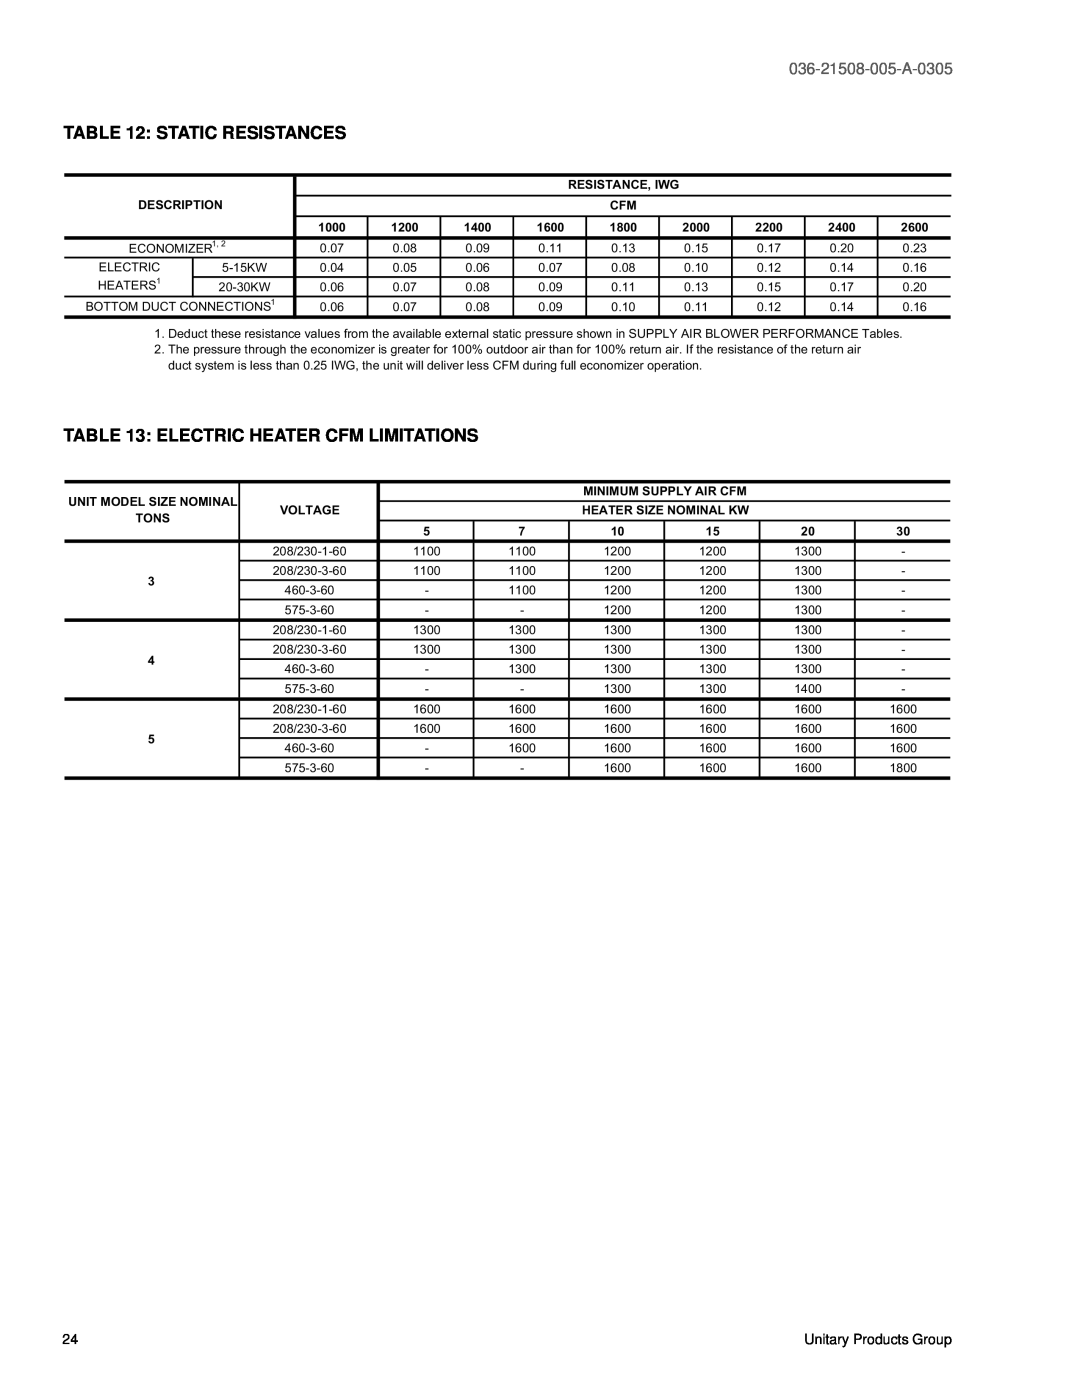 York BQ 060, BQ 036, BQ 048 warranty Static Resistances, Electric Heater Cfm Limitations, 036-21508-005-A-0305 